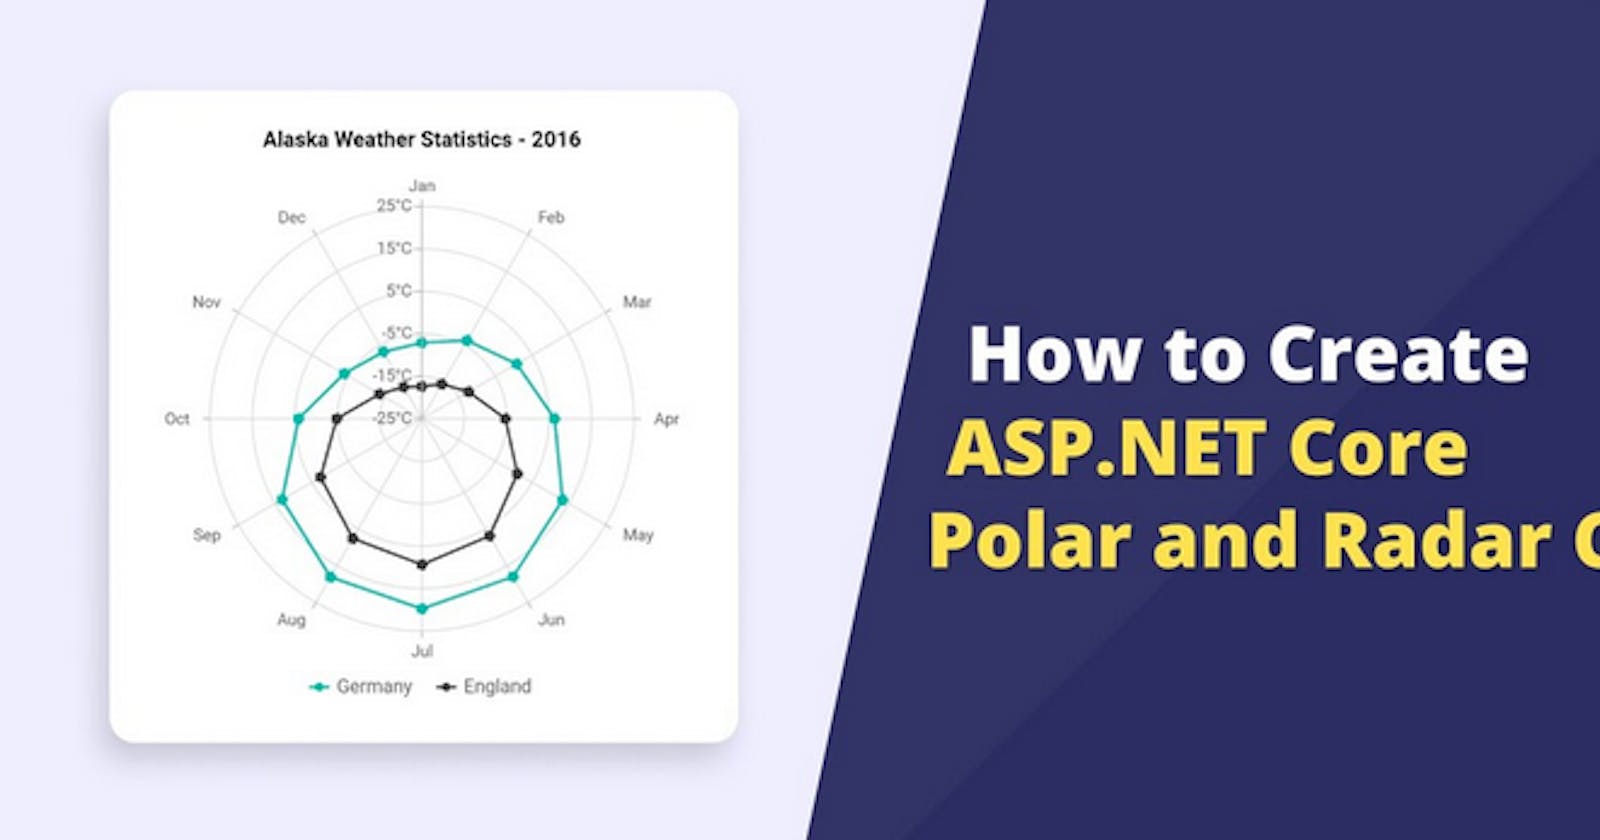 How to Create ASP.NET Core Polar and Radar Charts